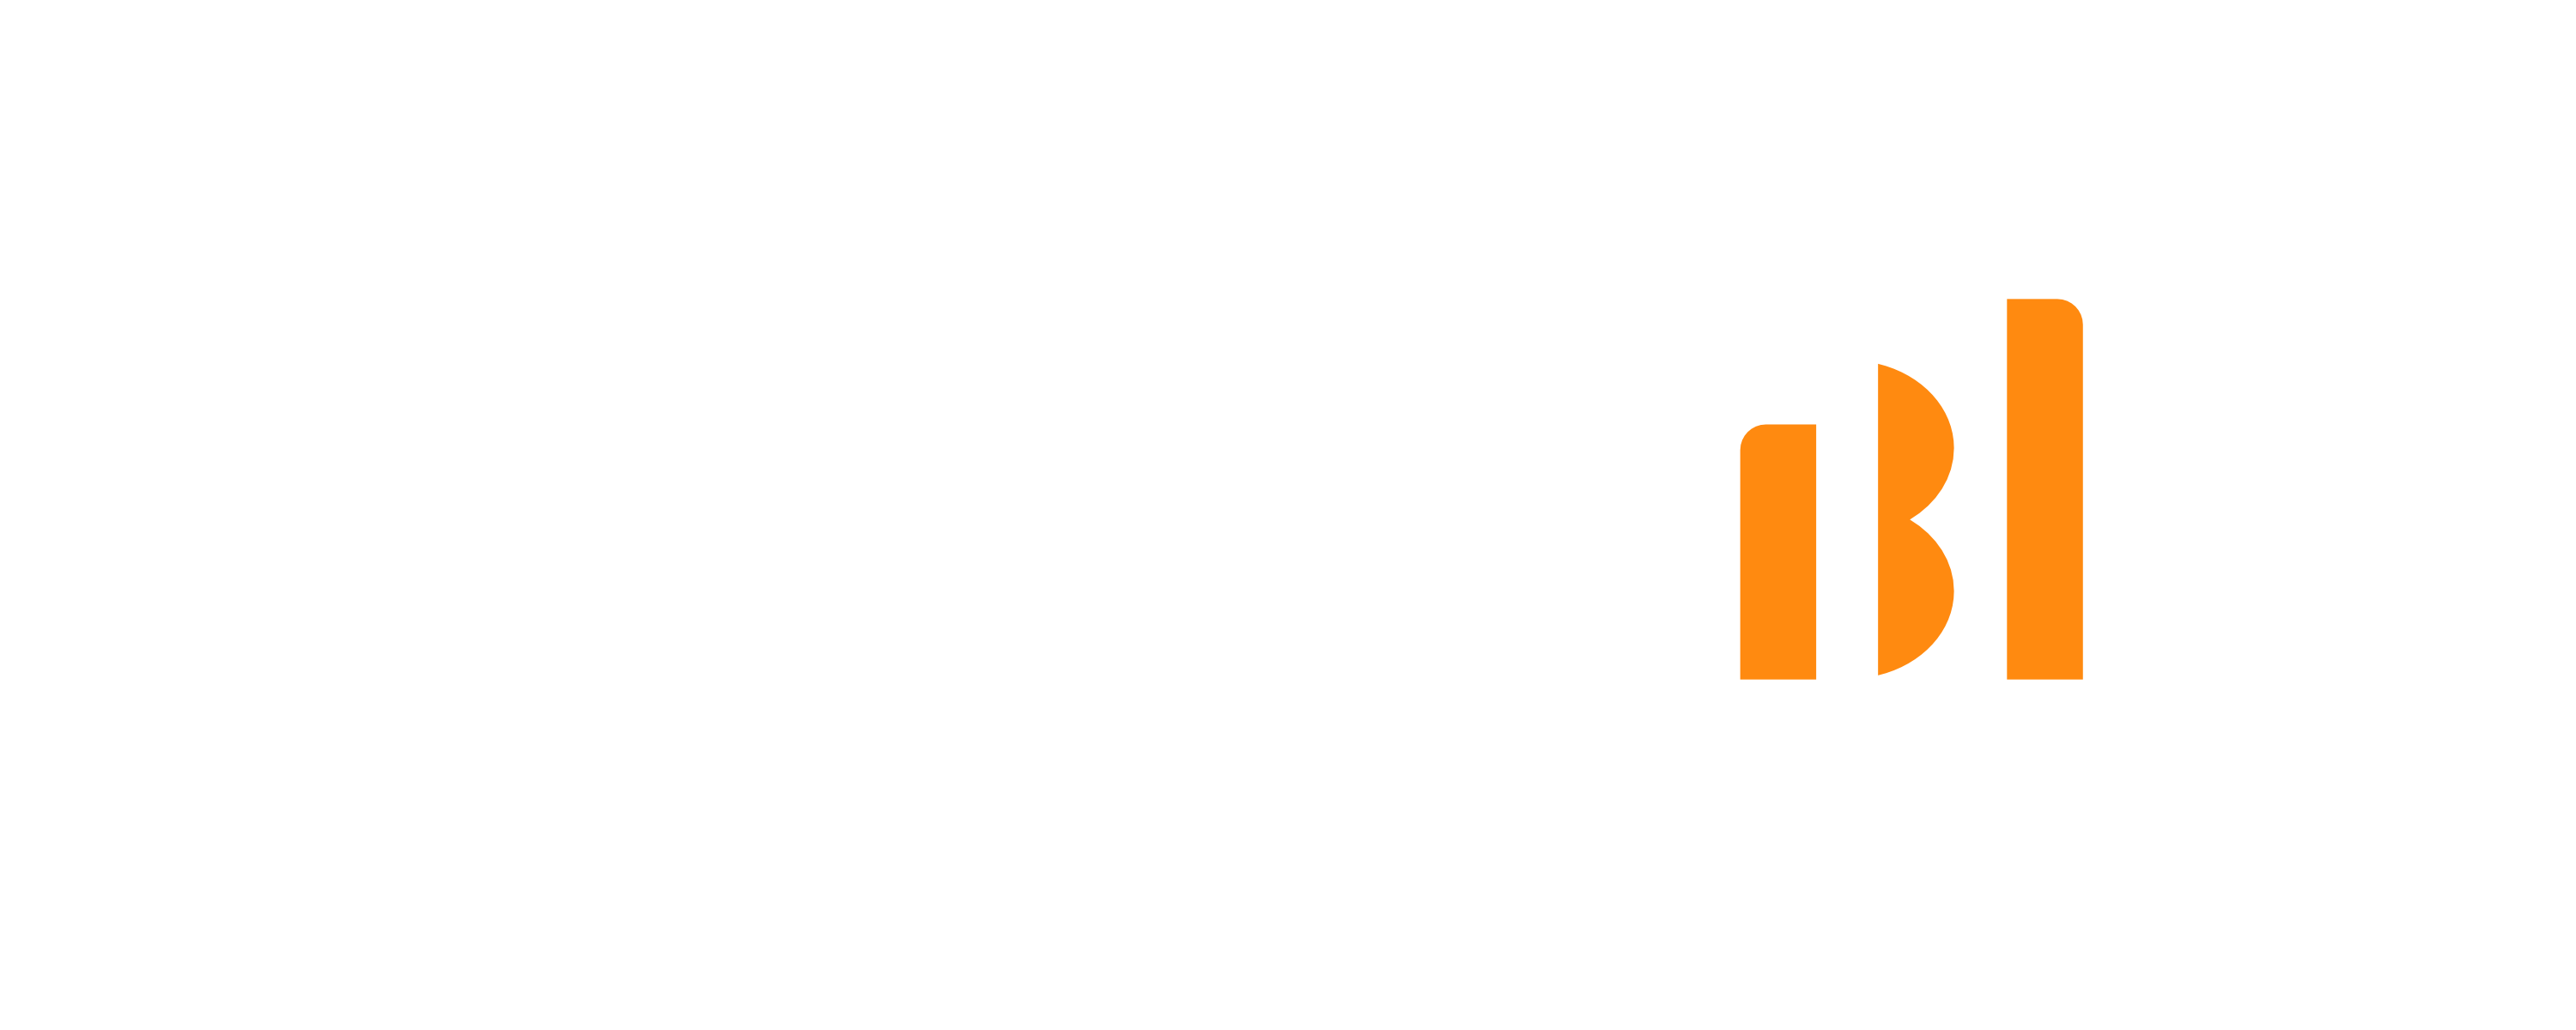 Results BI